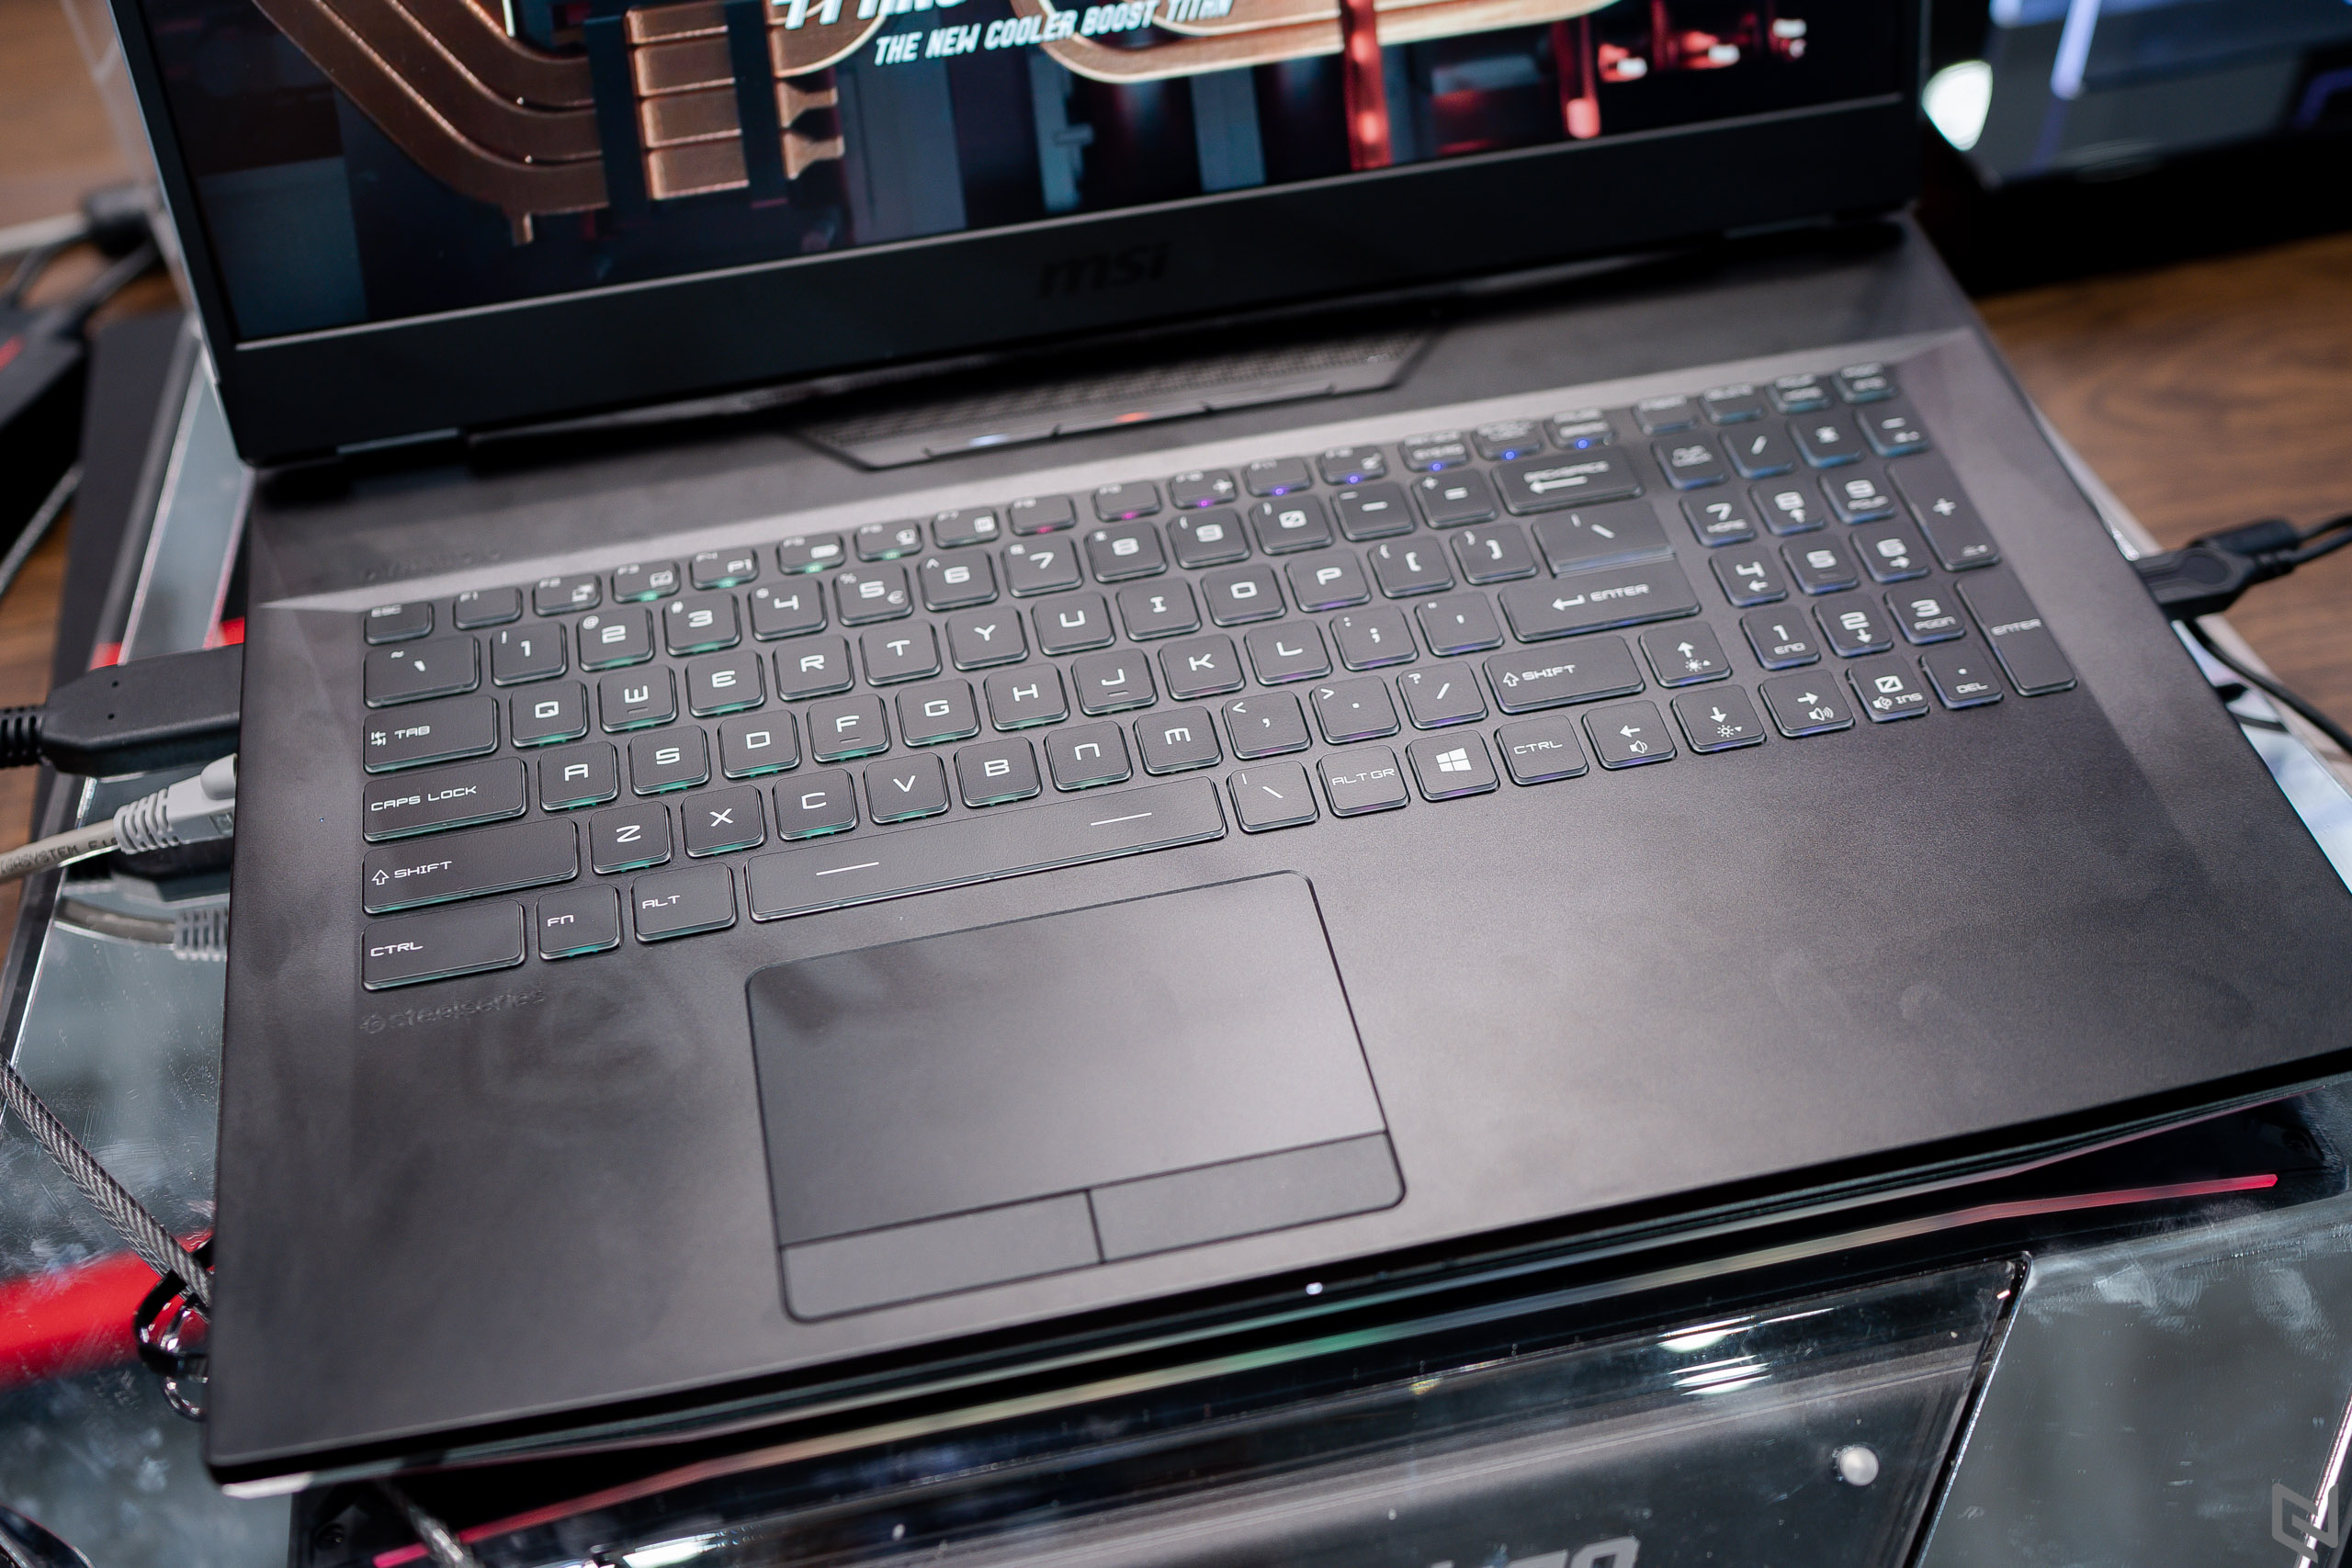 MSI giới thiệu hai mẫu laptop mới nhất GT76 Titan và laptop NVIDIA Studio WS65 tại Computex 2019